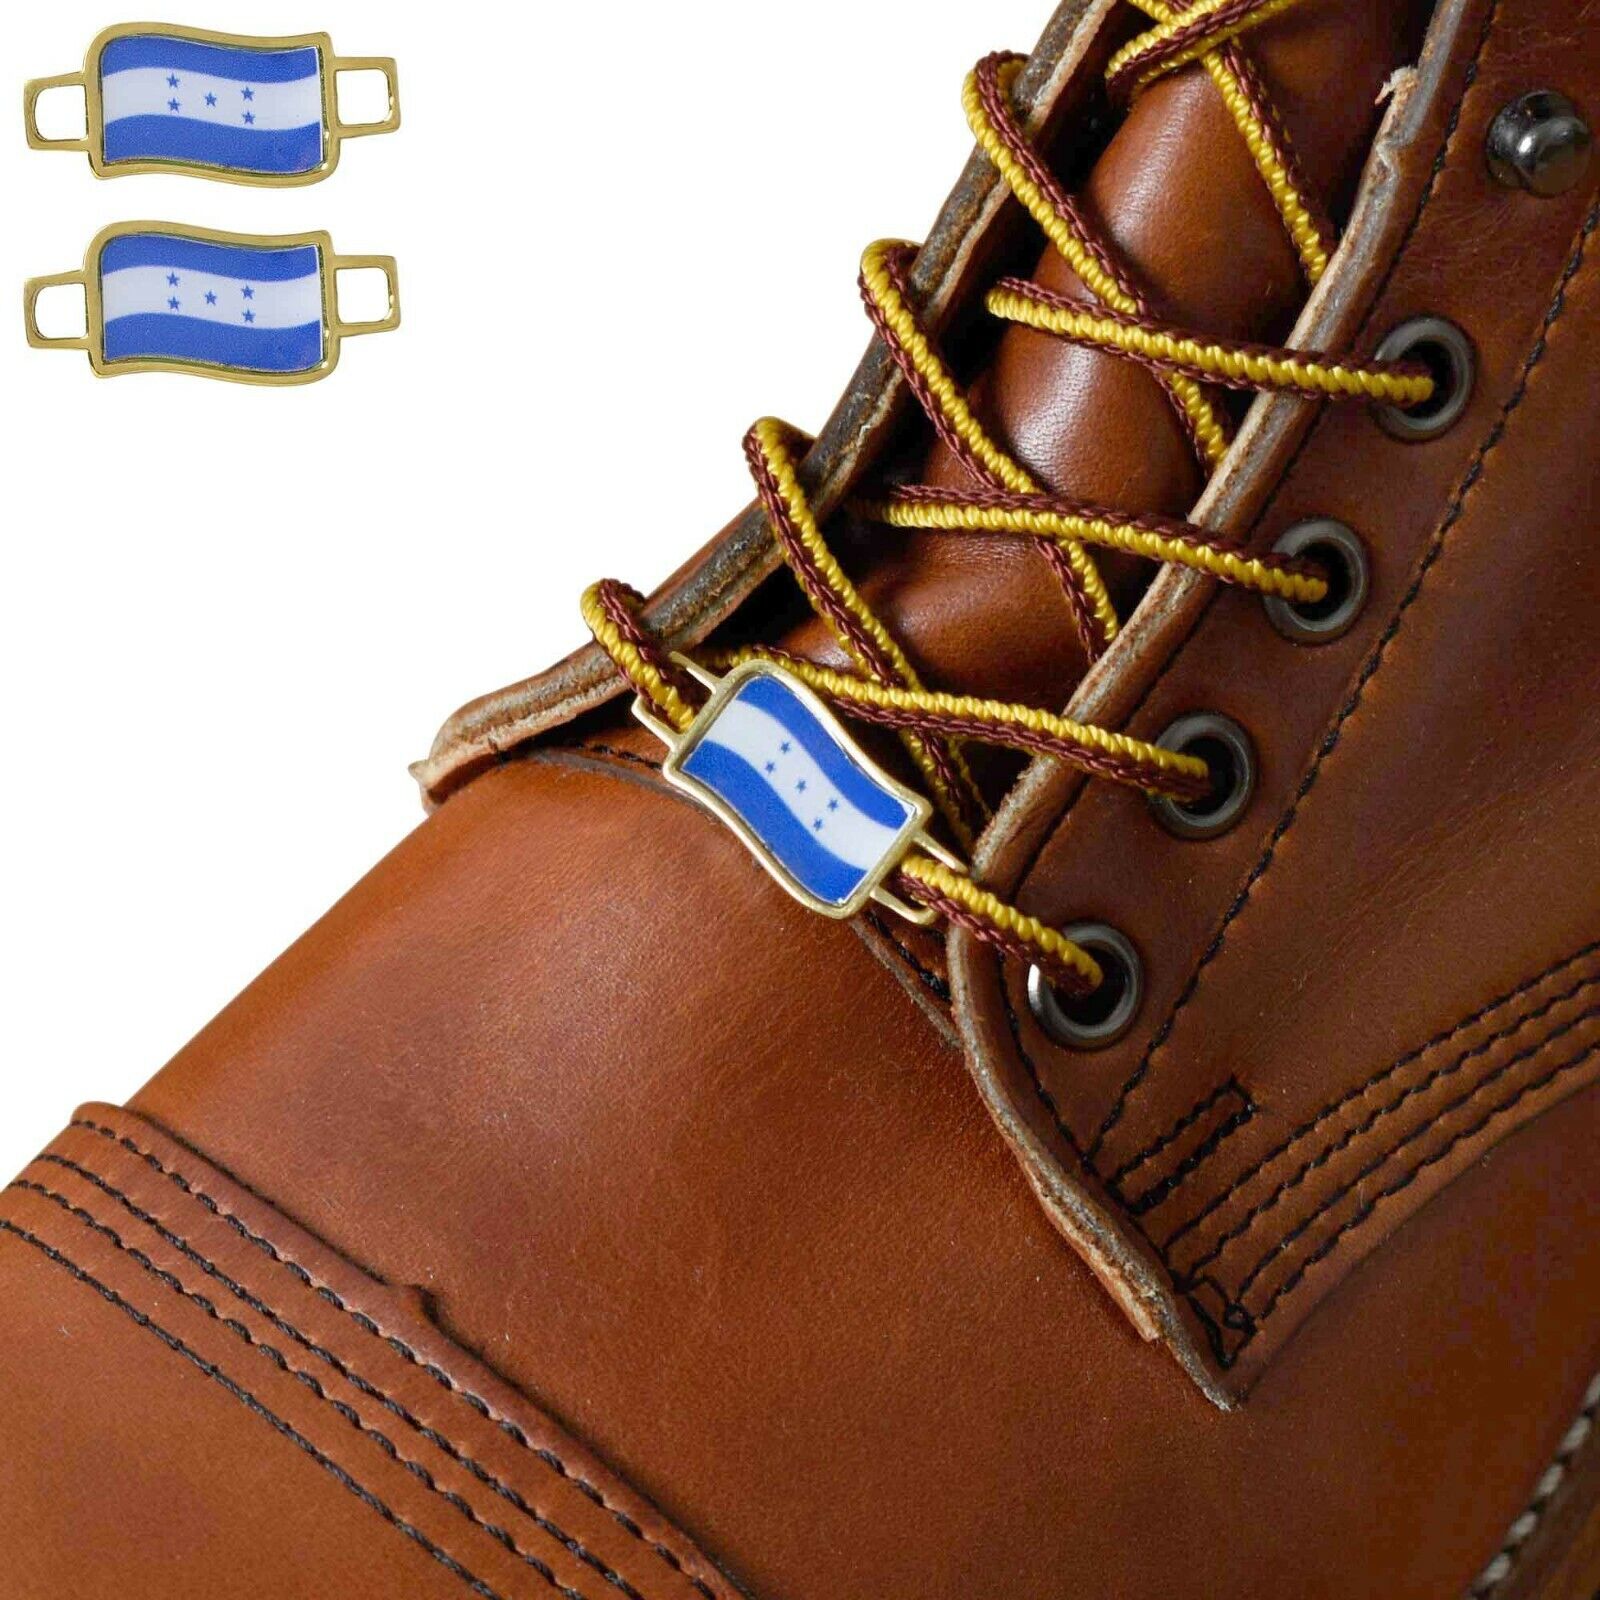 Honduras Flags Shoes Boot Shoelace Keeper Holder Charm BrooklynMaker